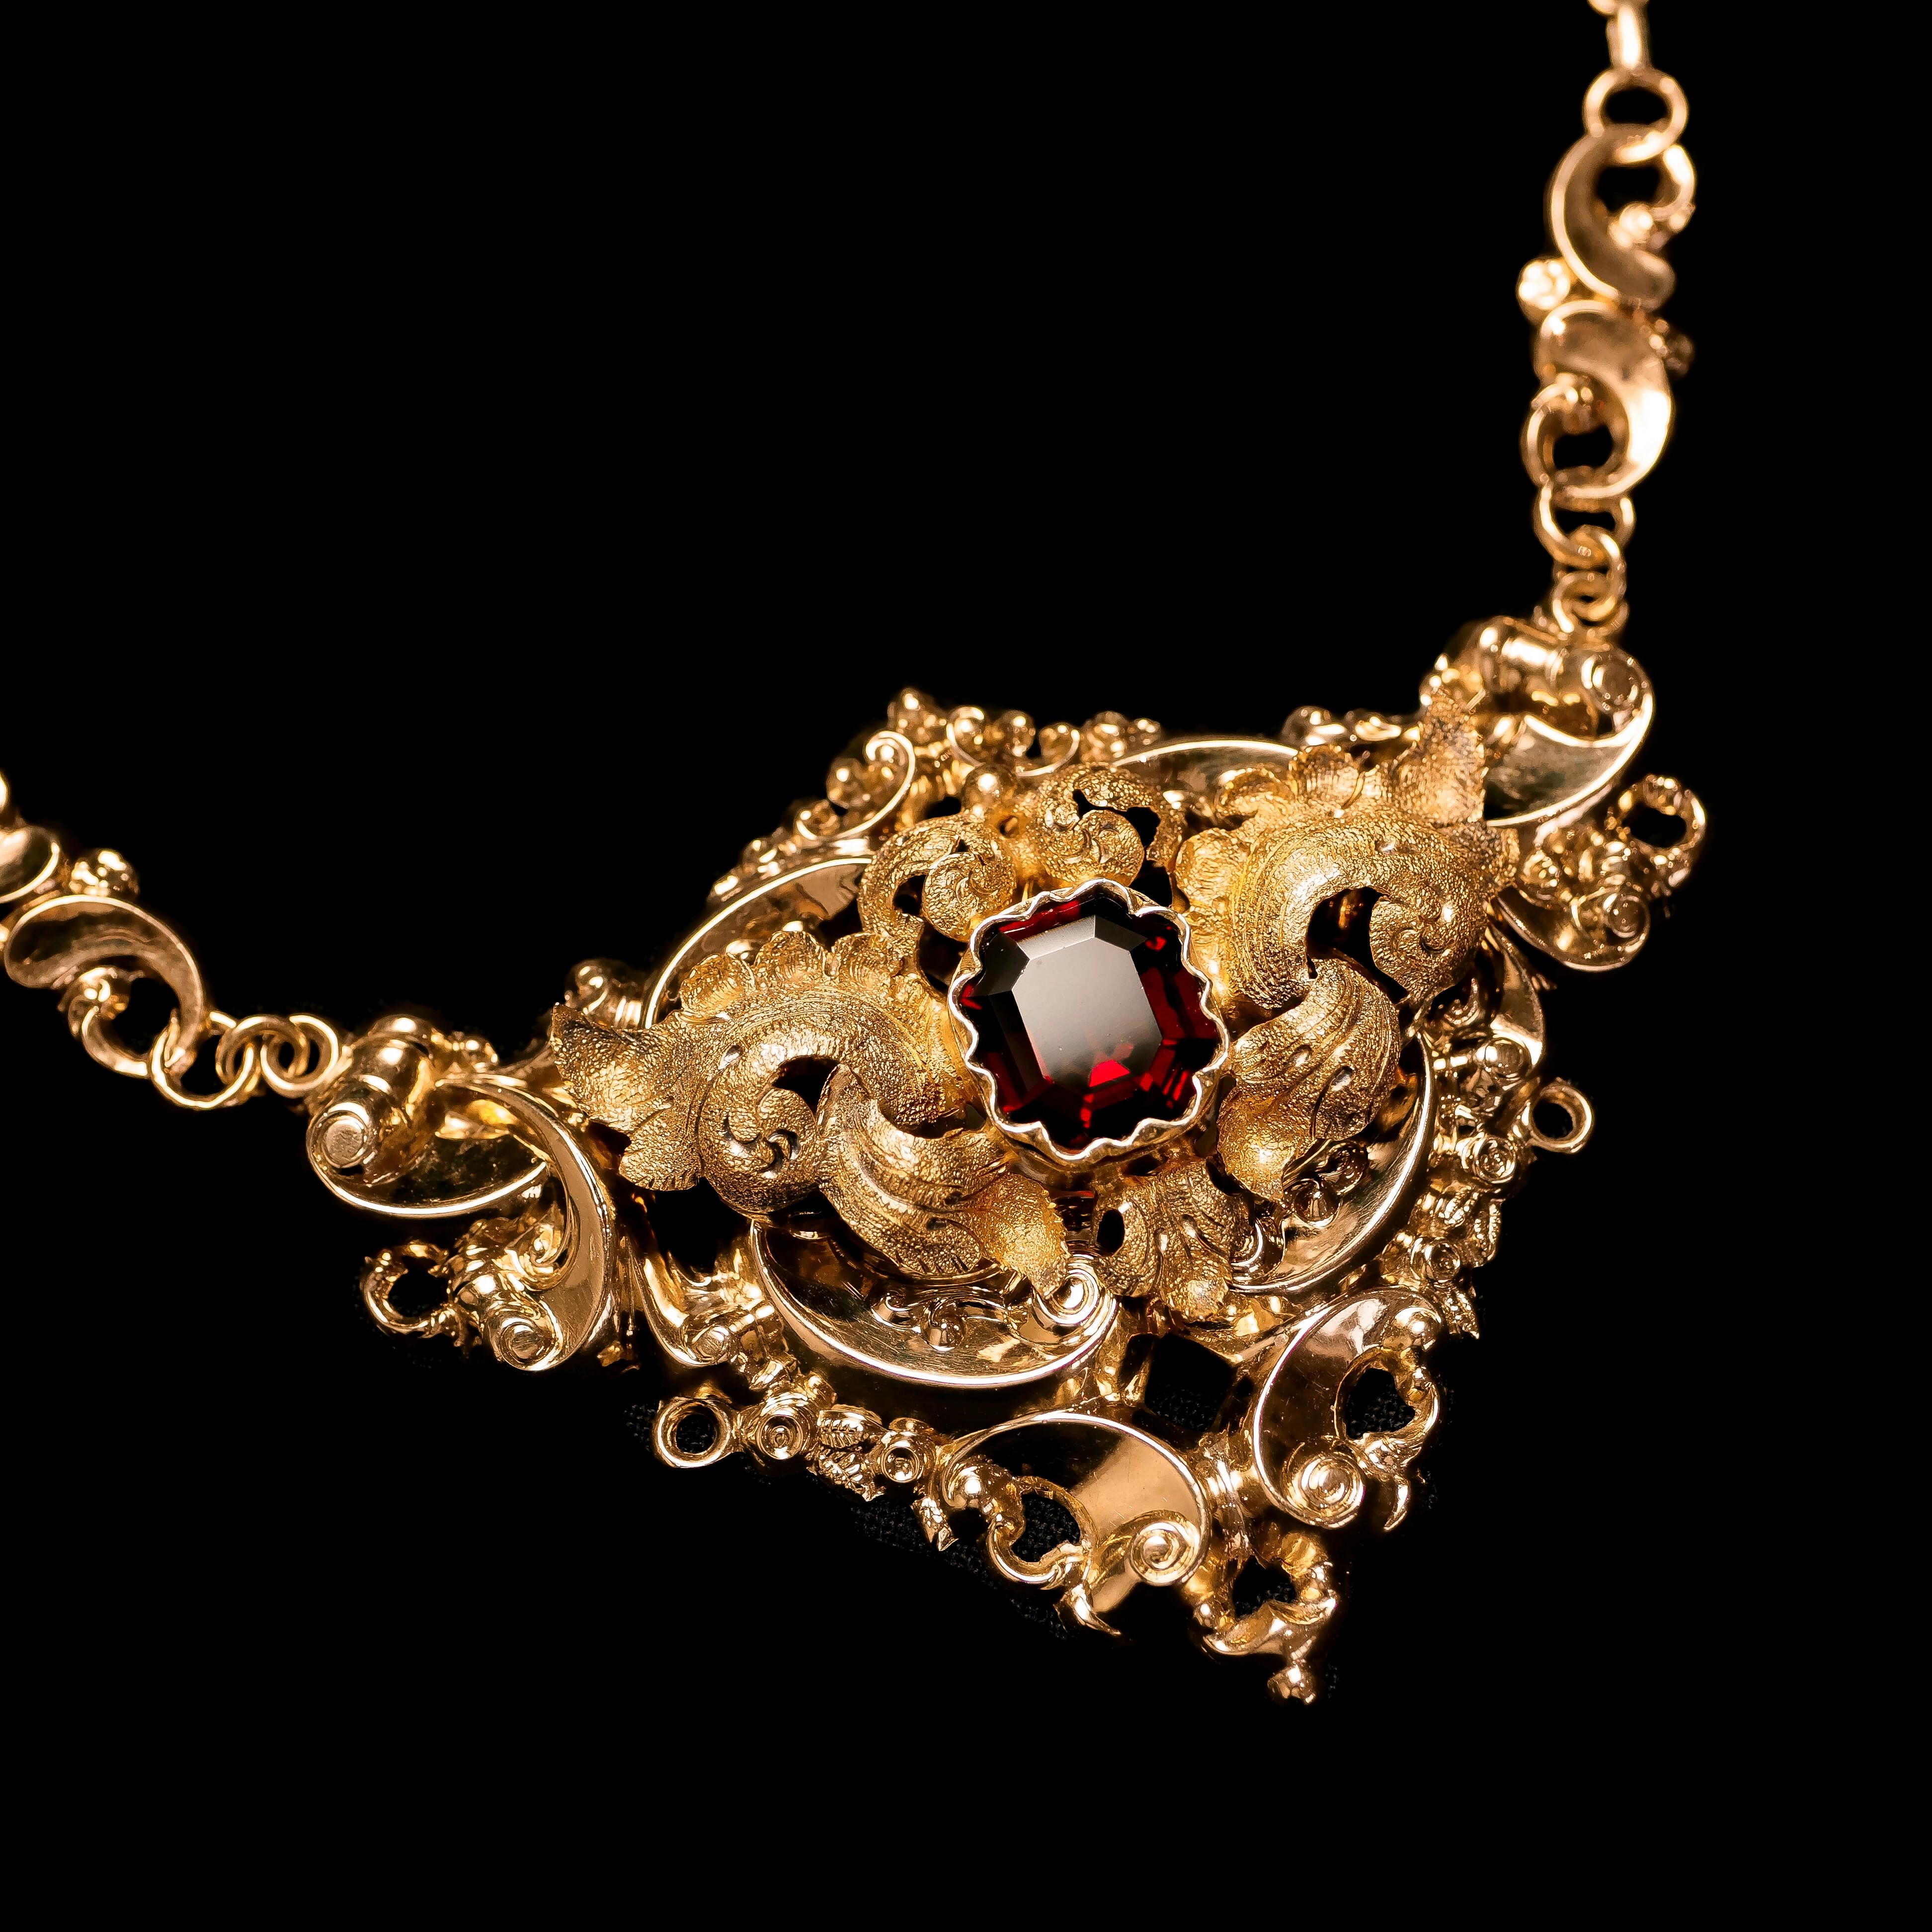 Antique Victorian 18K Gold Garnet Necklace in Baroque Revival Style, c.1840 5